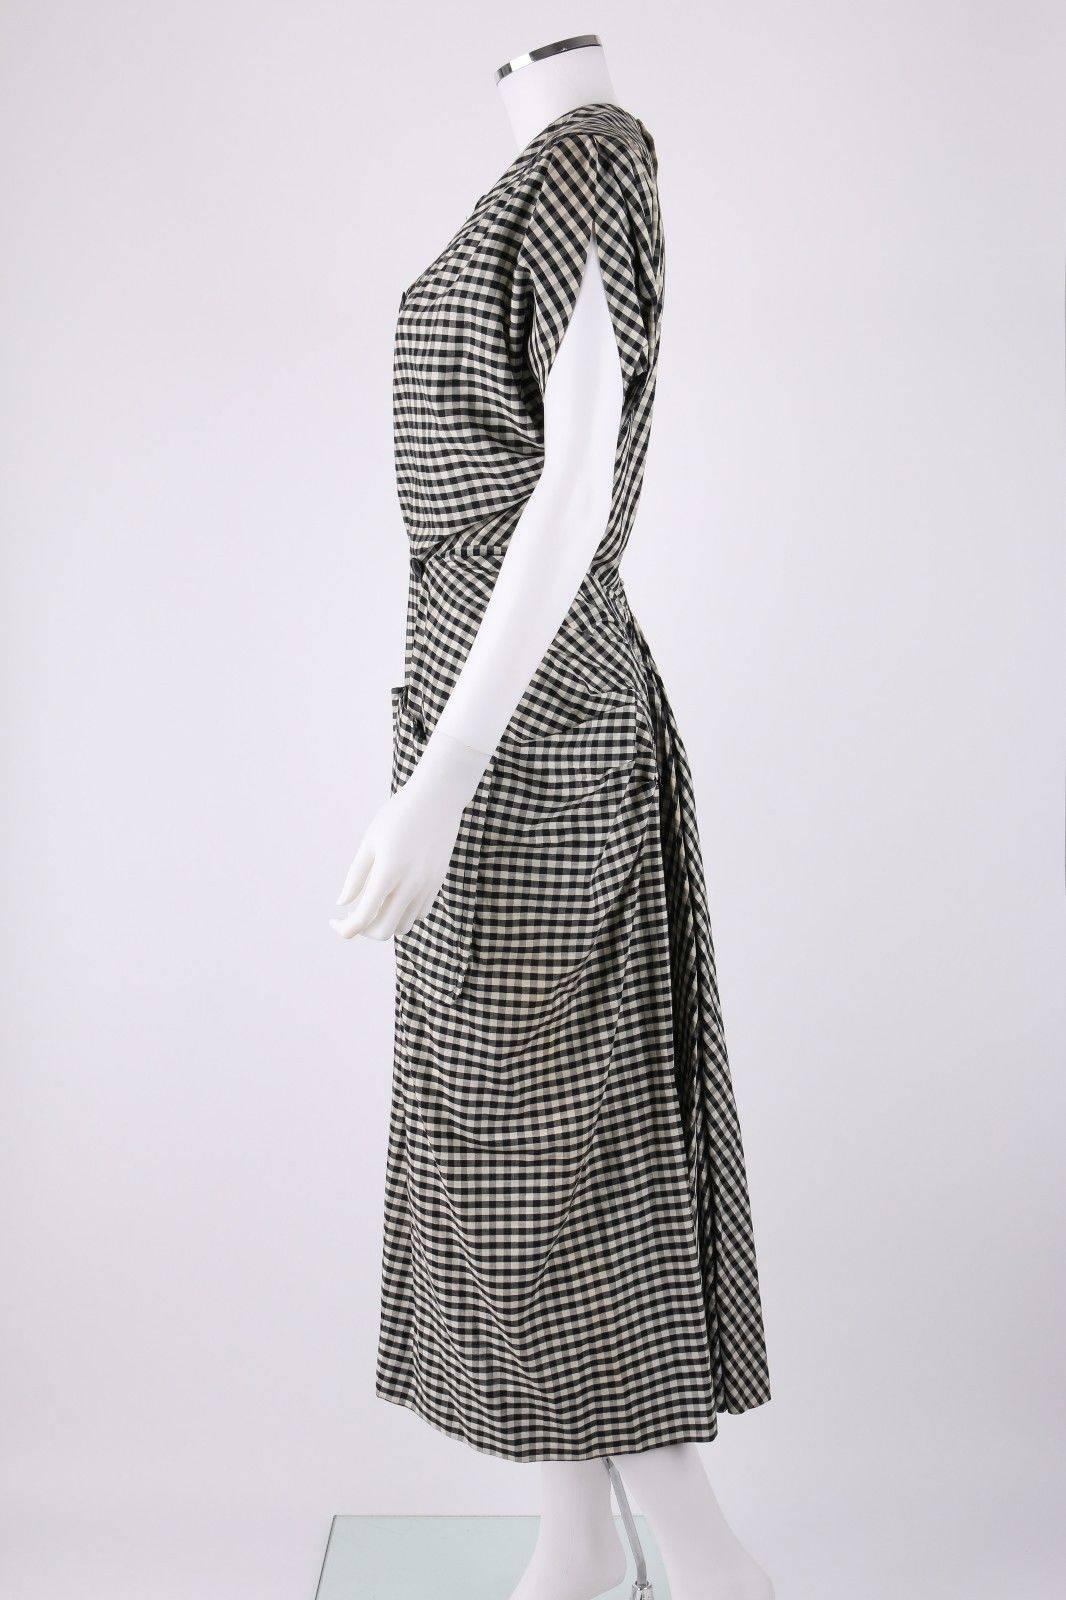 1949s fashion